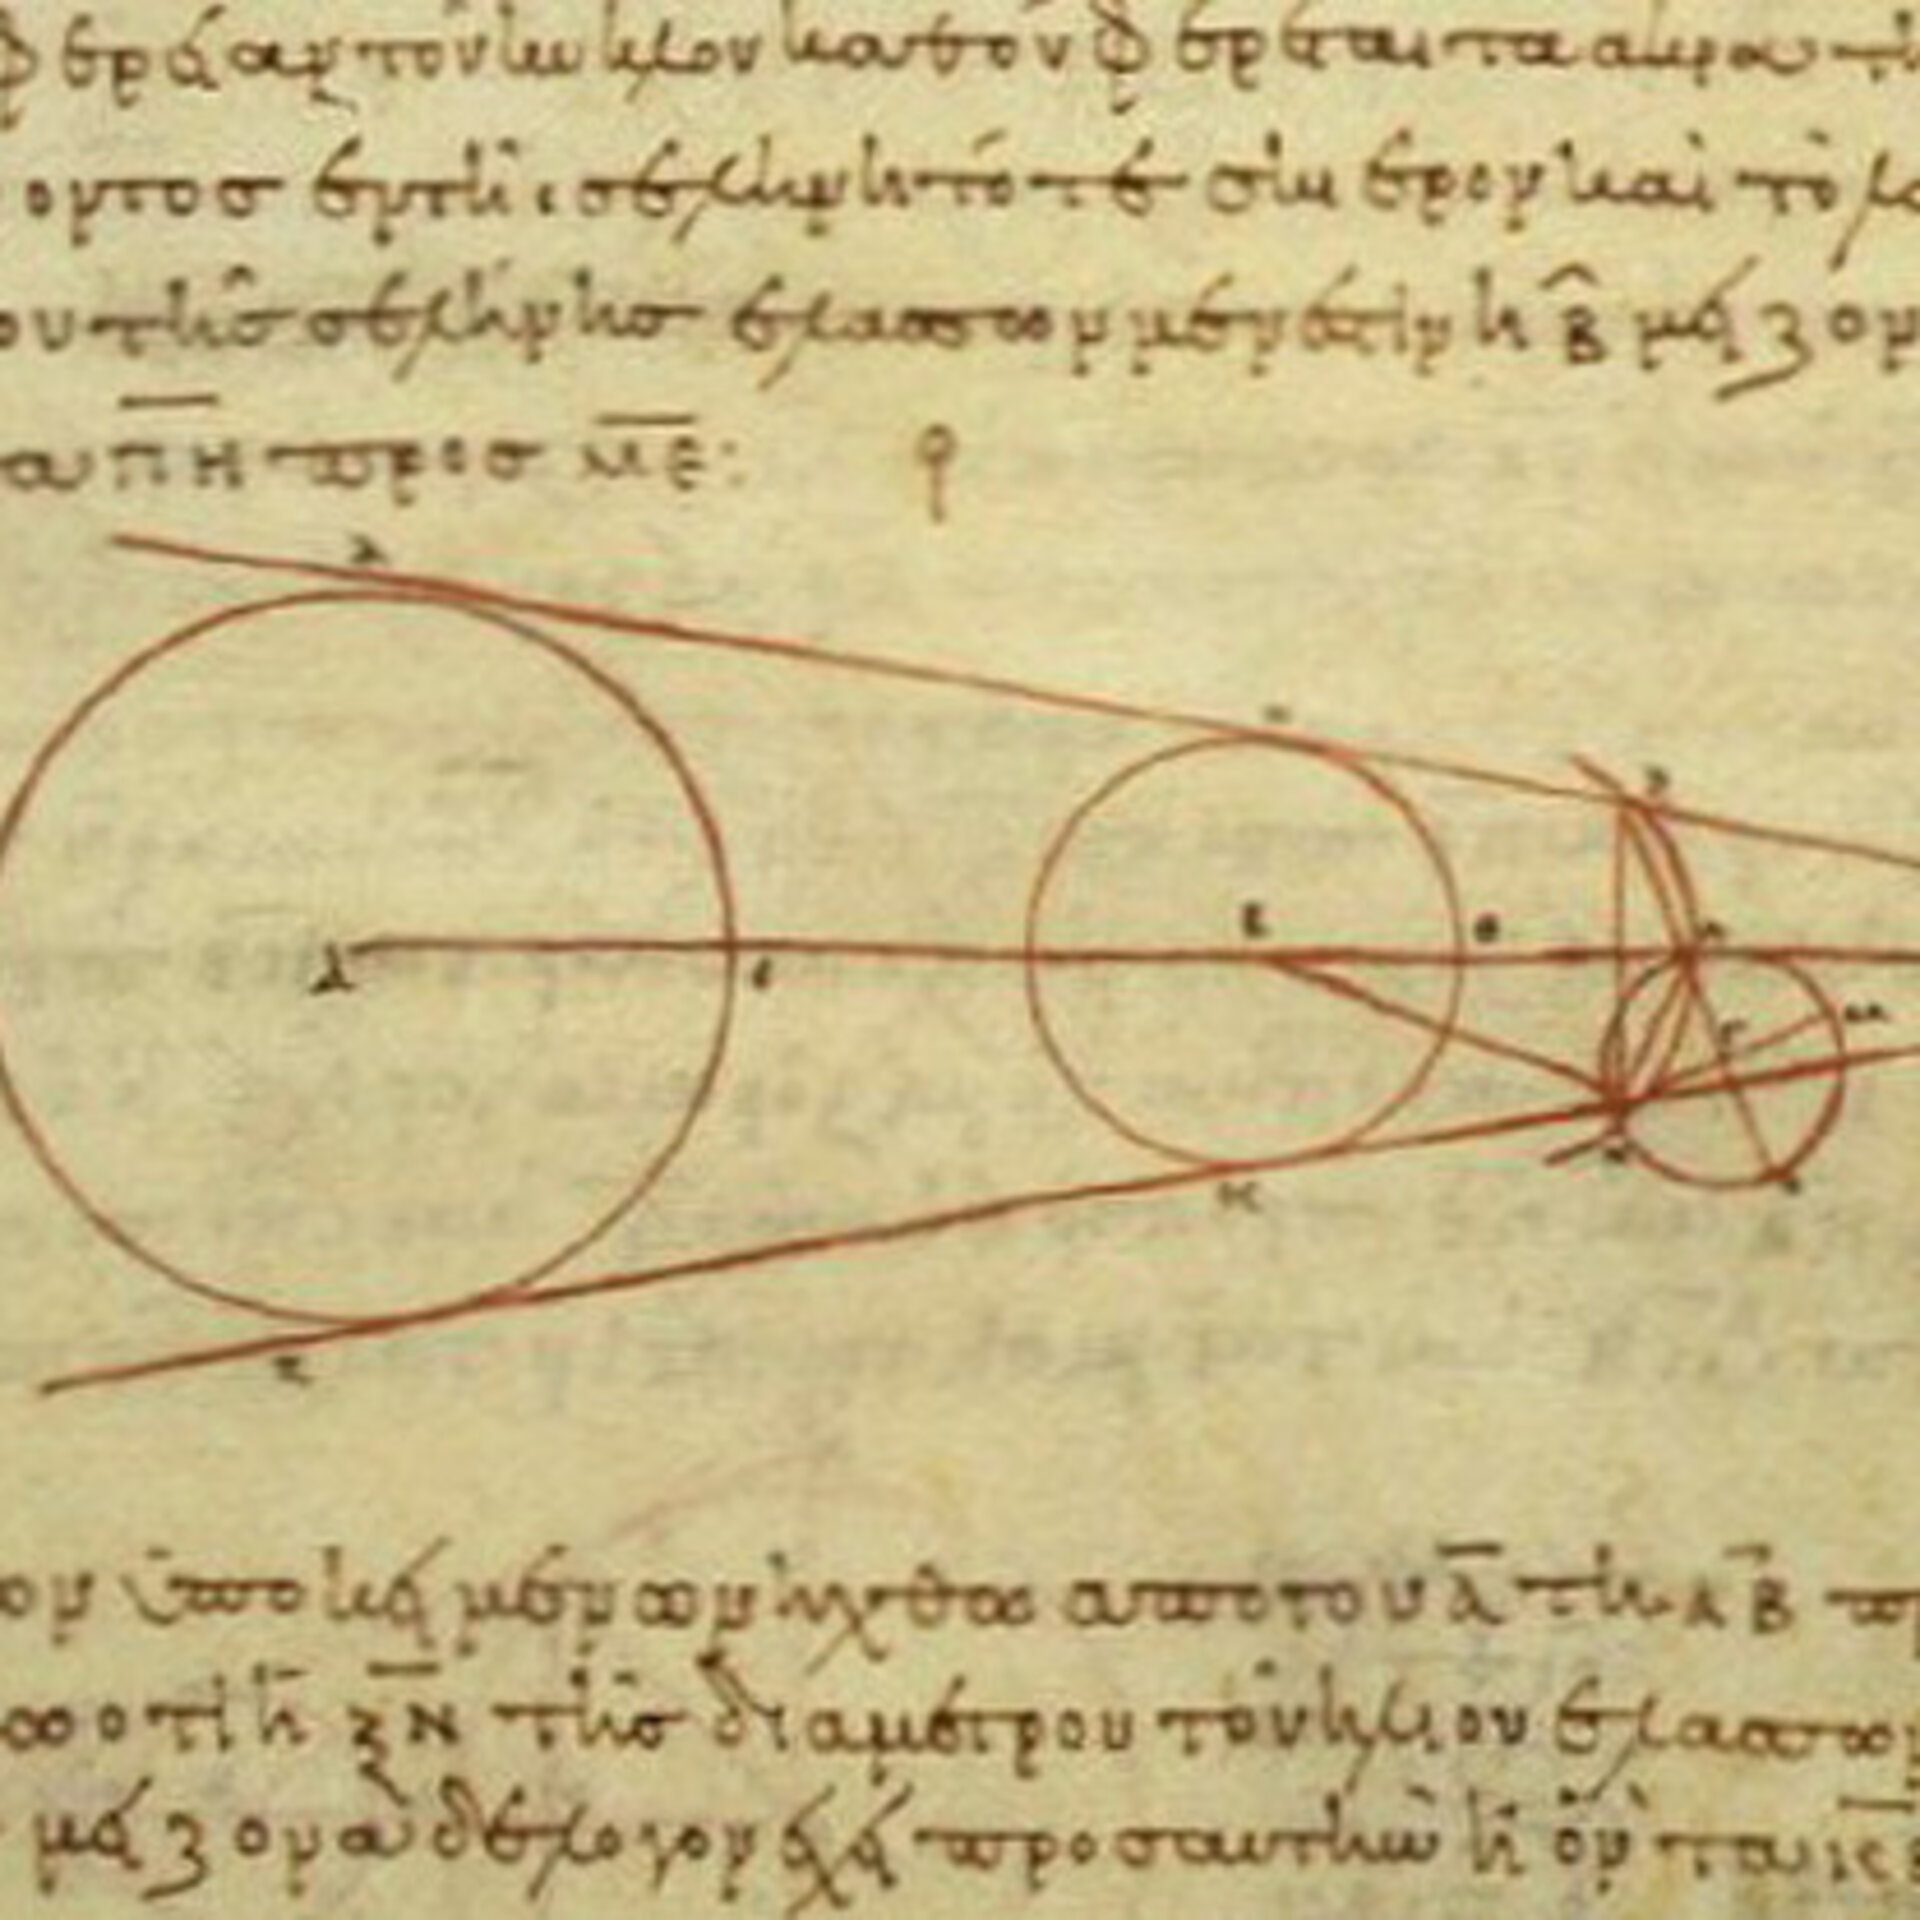 Second-century calculations